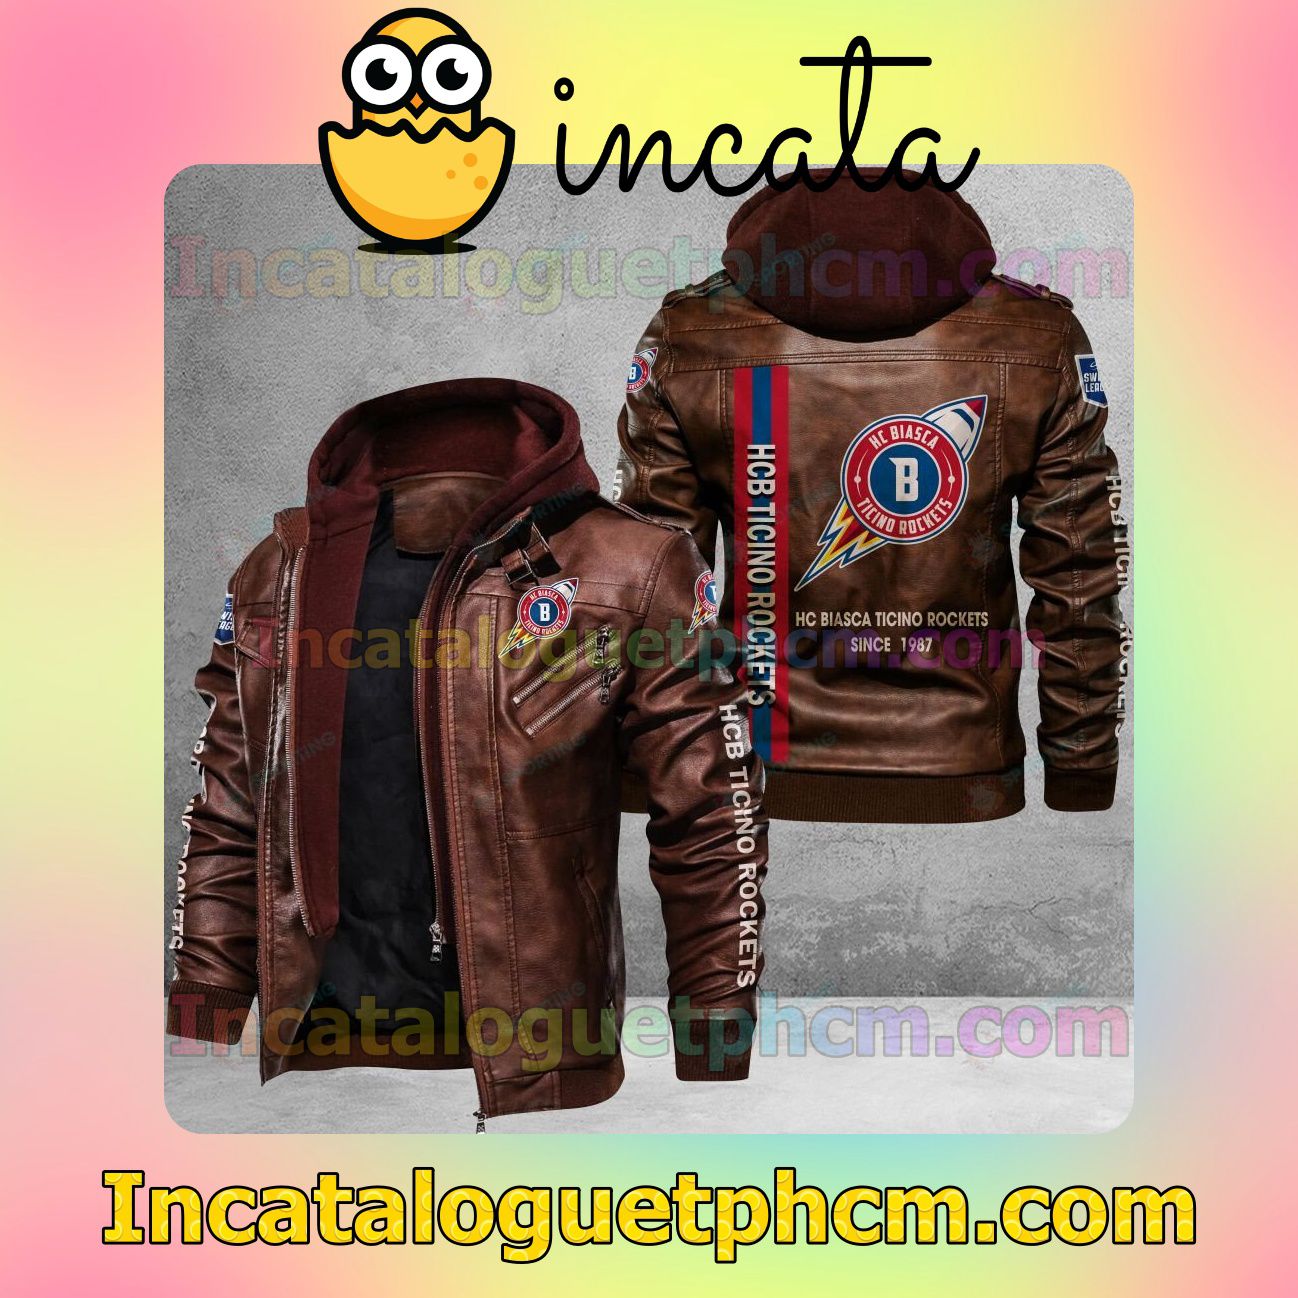 Best Gift HCB Ticino Rockets Brand Uniform Leather Jacket